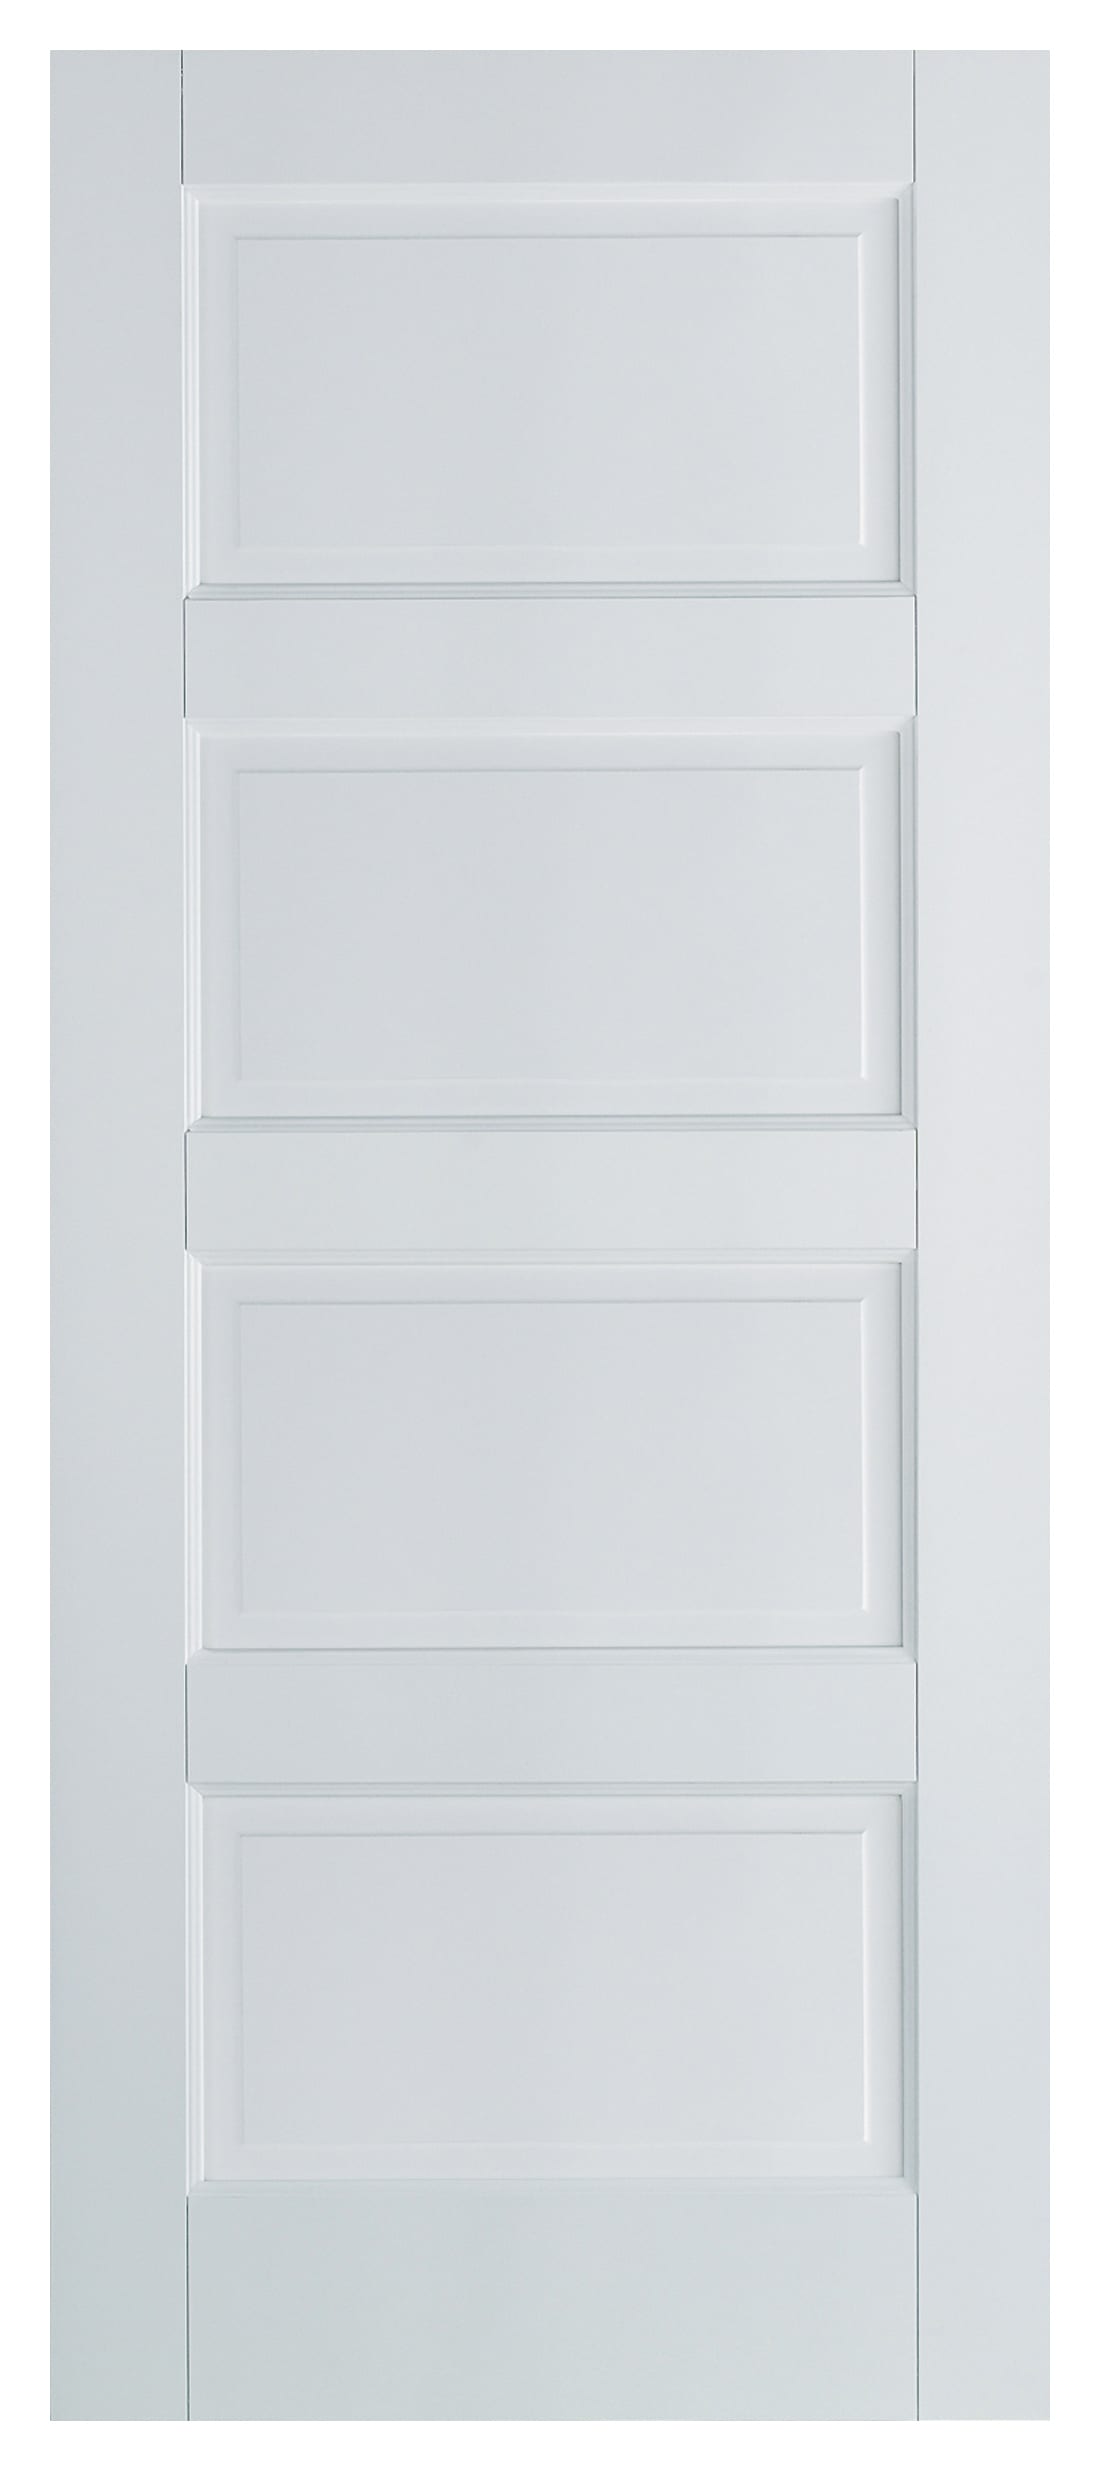 LPD Internal Contemporary Primed White FD30 Fire Door